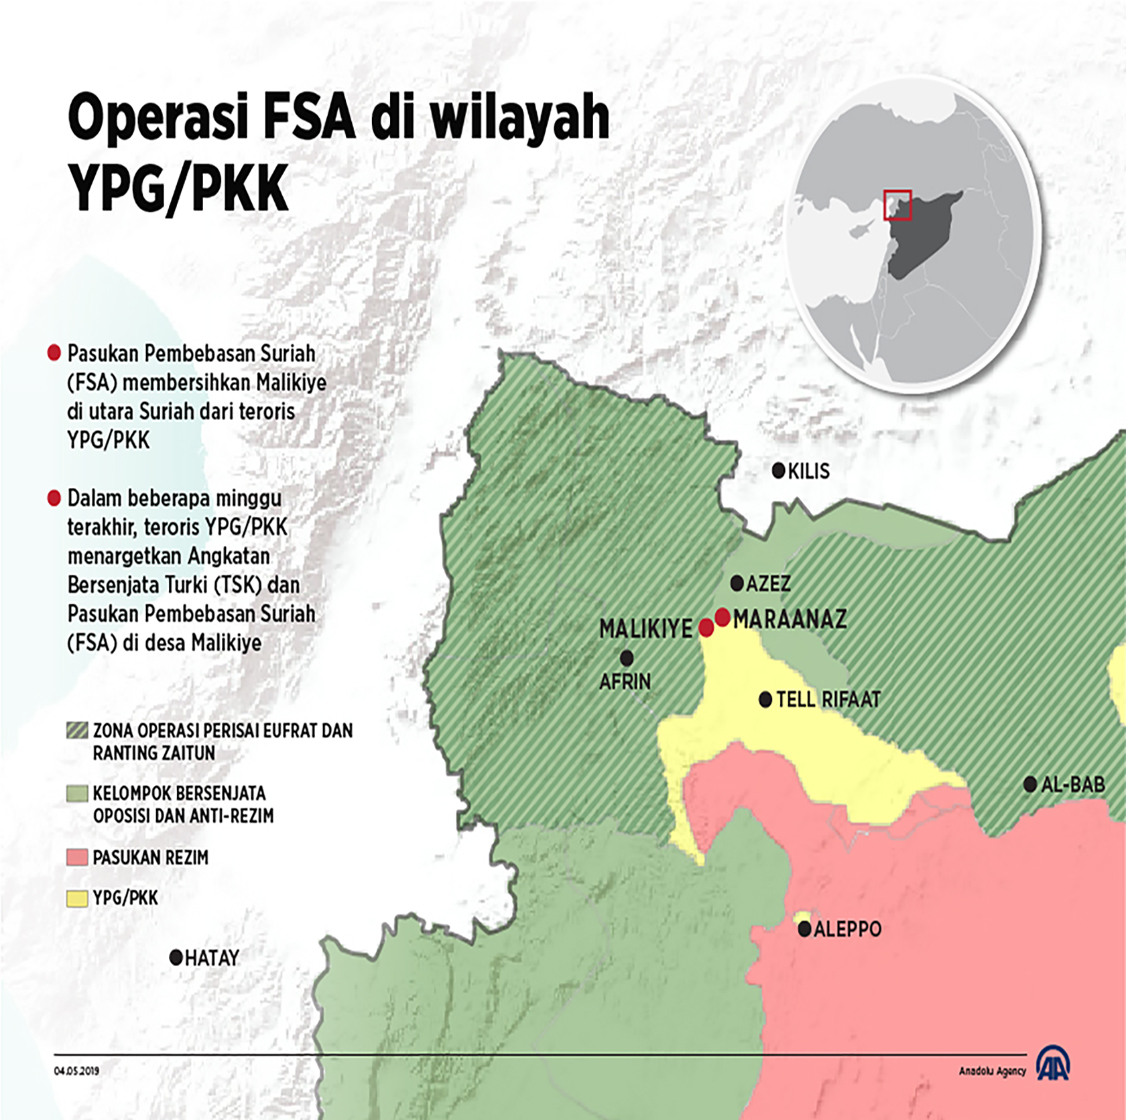 Operasi FSA di wilayah YPG/PKK